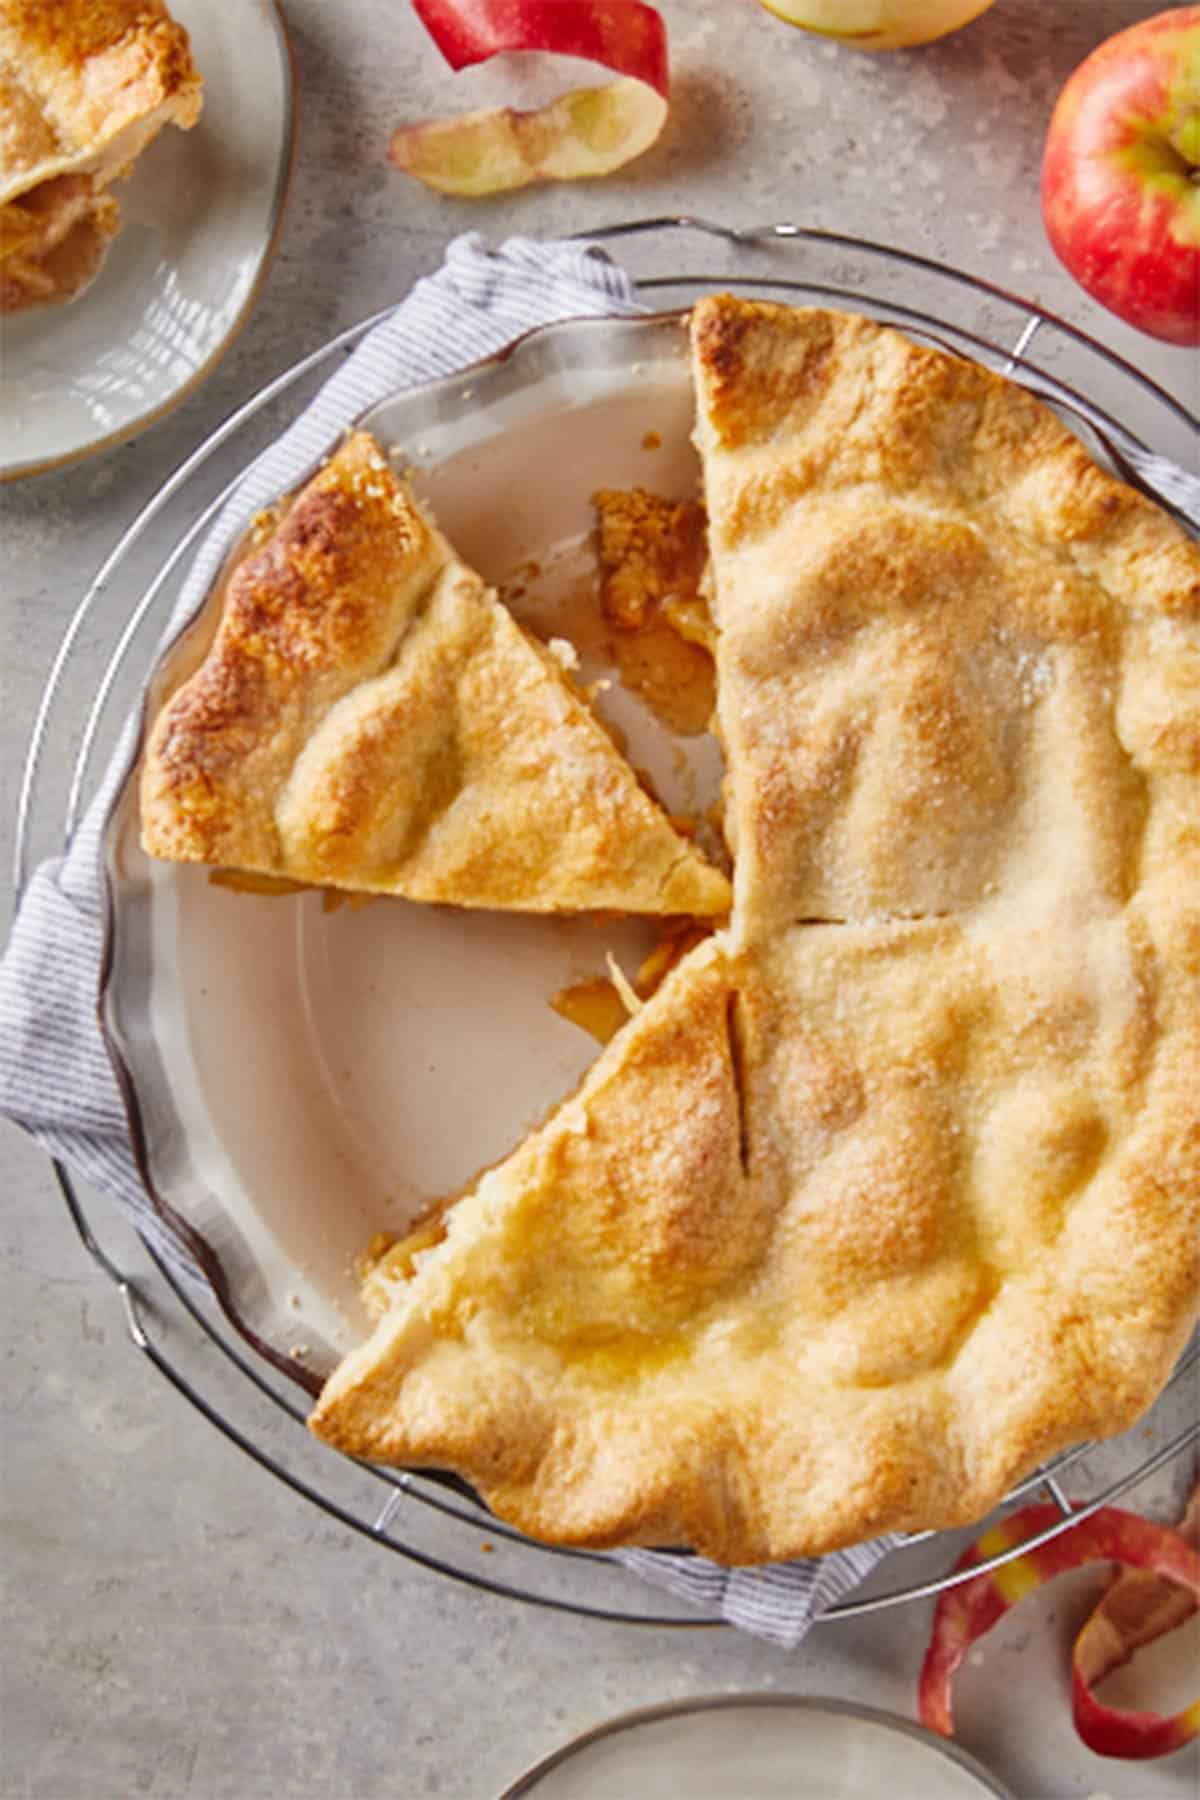 Best Apple Pie Recipe 4 - The Best Apple Pie Recipe Online (Fool-Proof!)